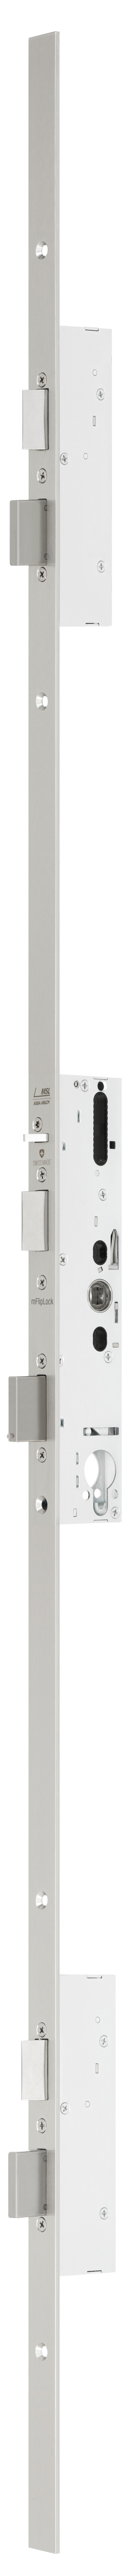 mFlipLock panic security multi-point locking systems 24444PE-ZF